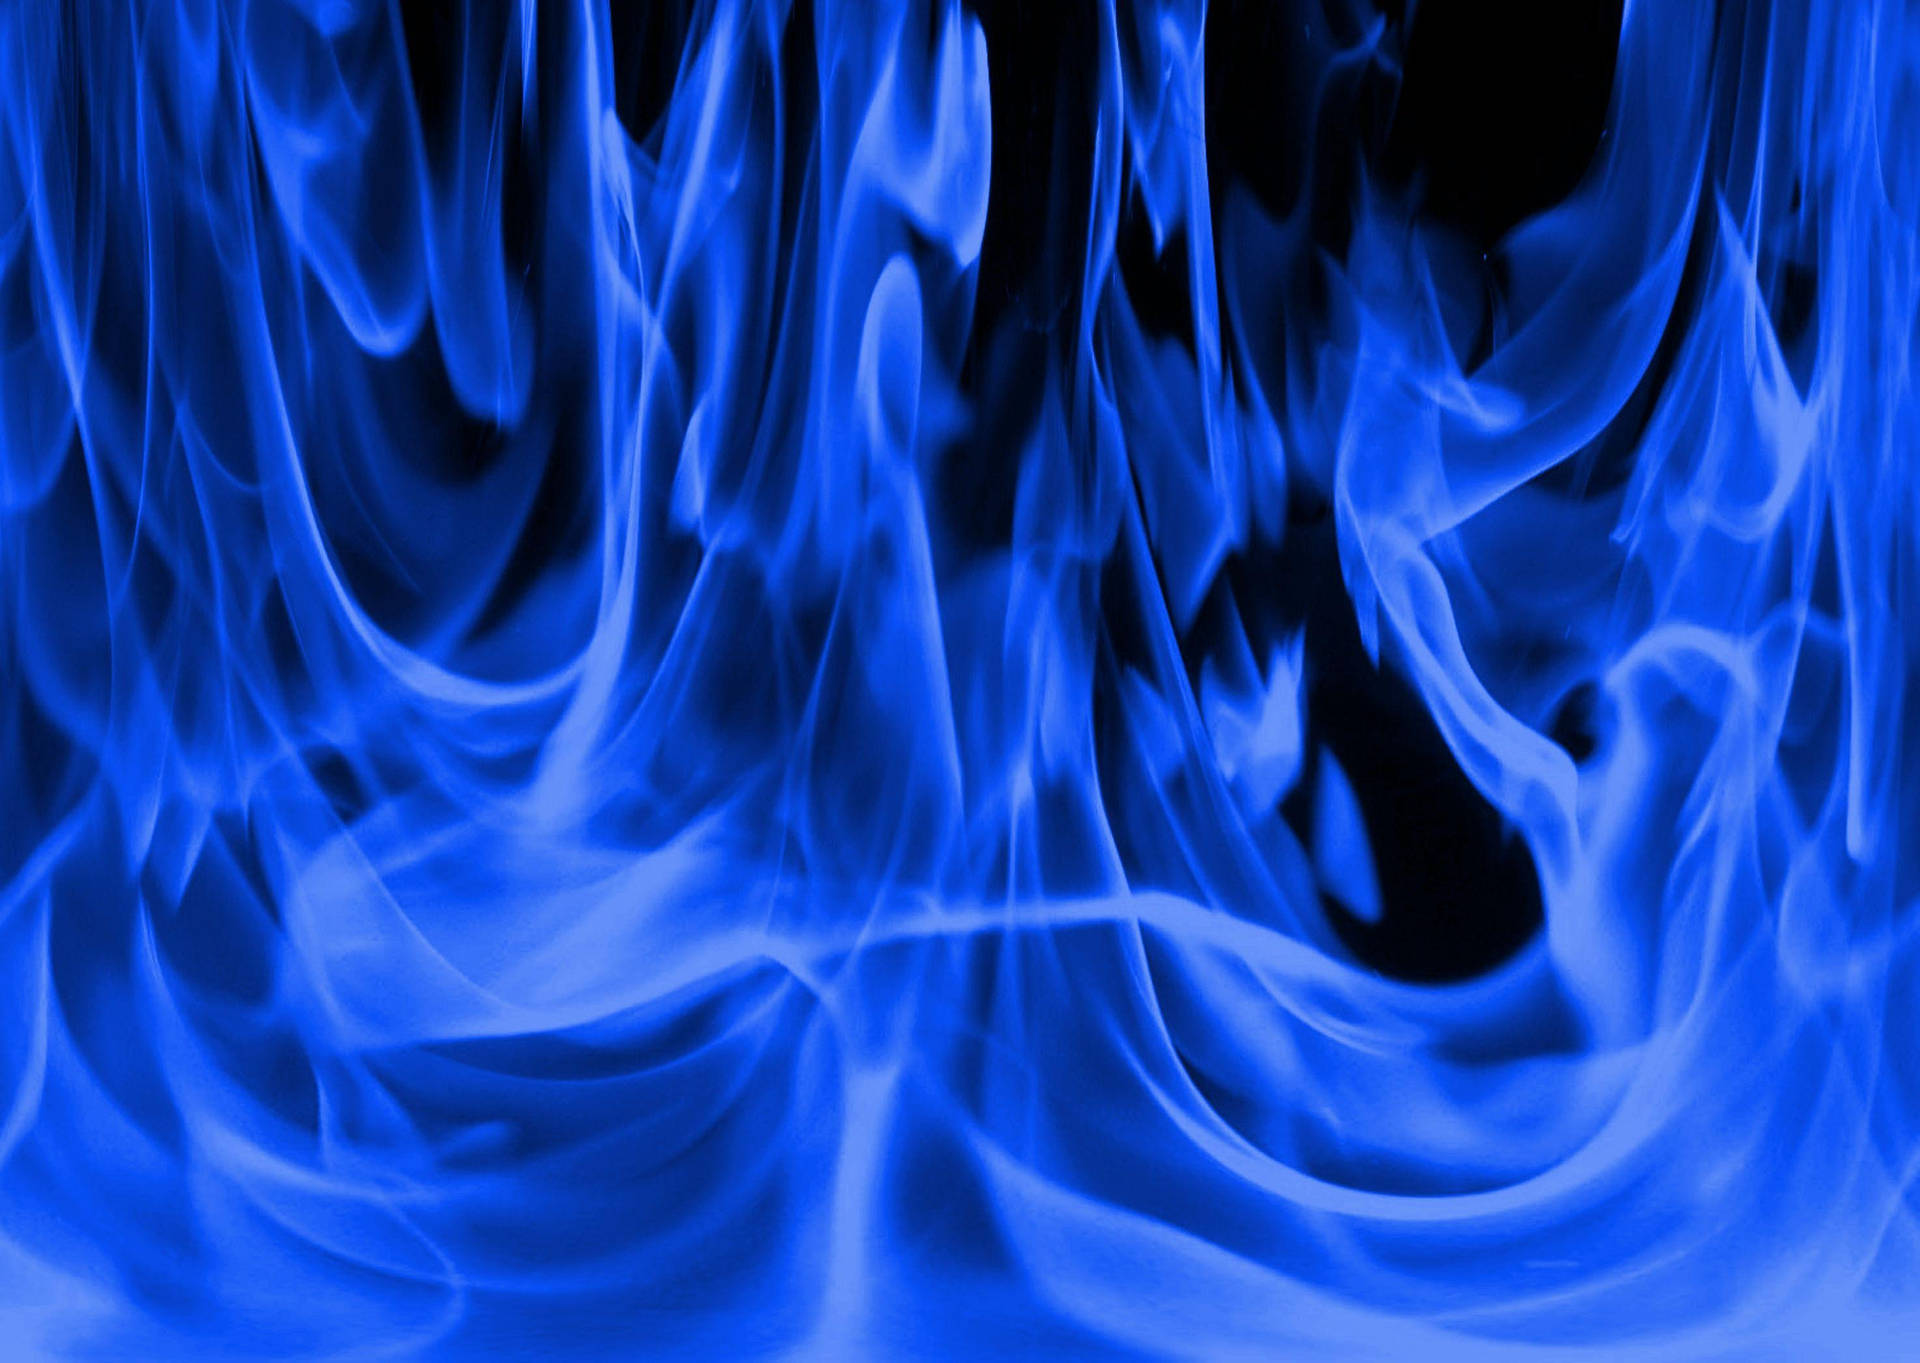 30k Blue Flame Pictures  Download Free Images on Unsplash